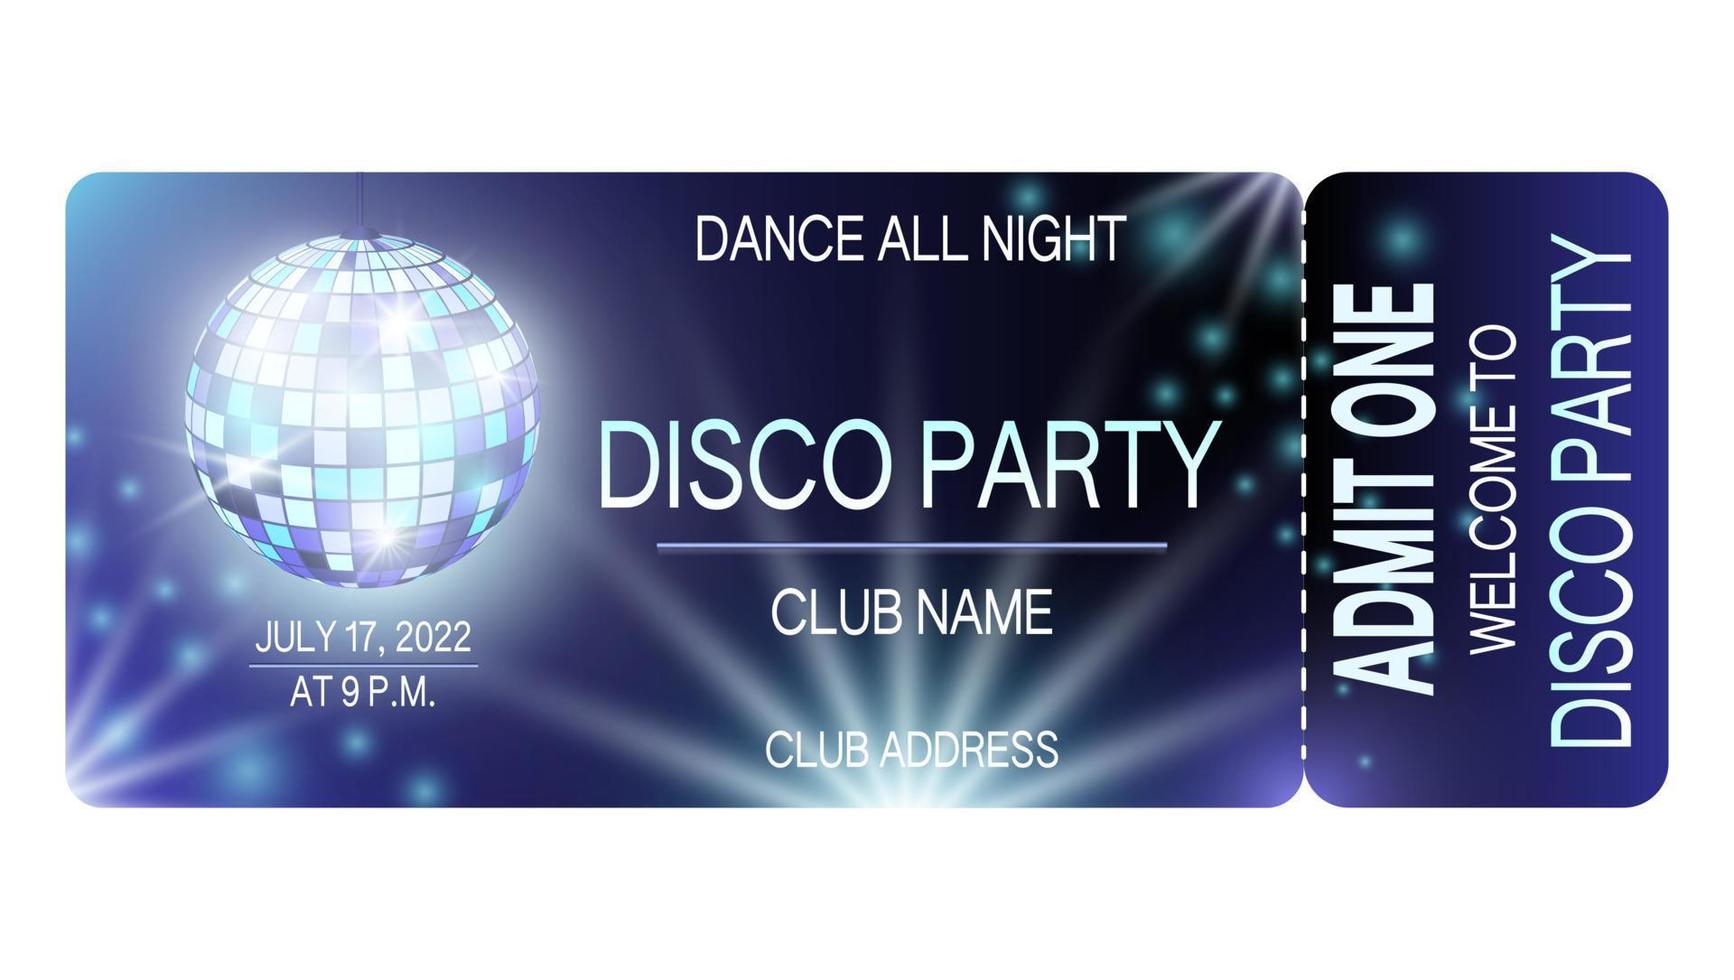 Disco party entrance ticket template. Design for a concert, party, festival. vector